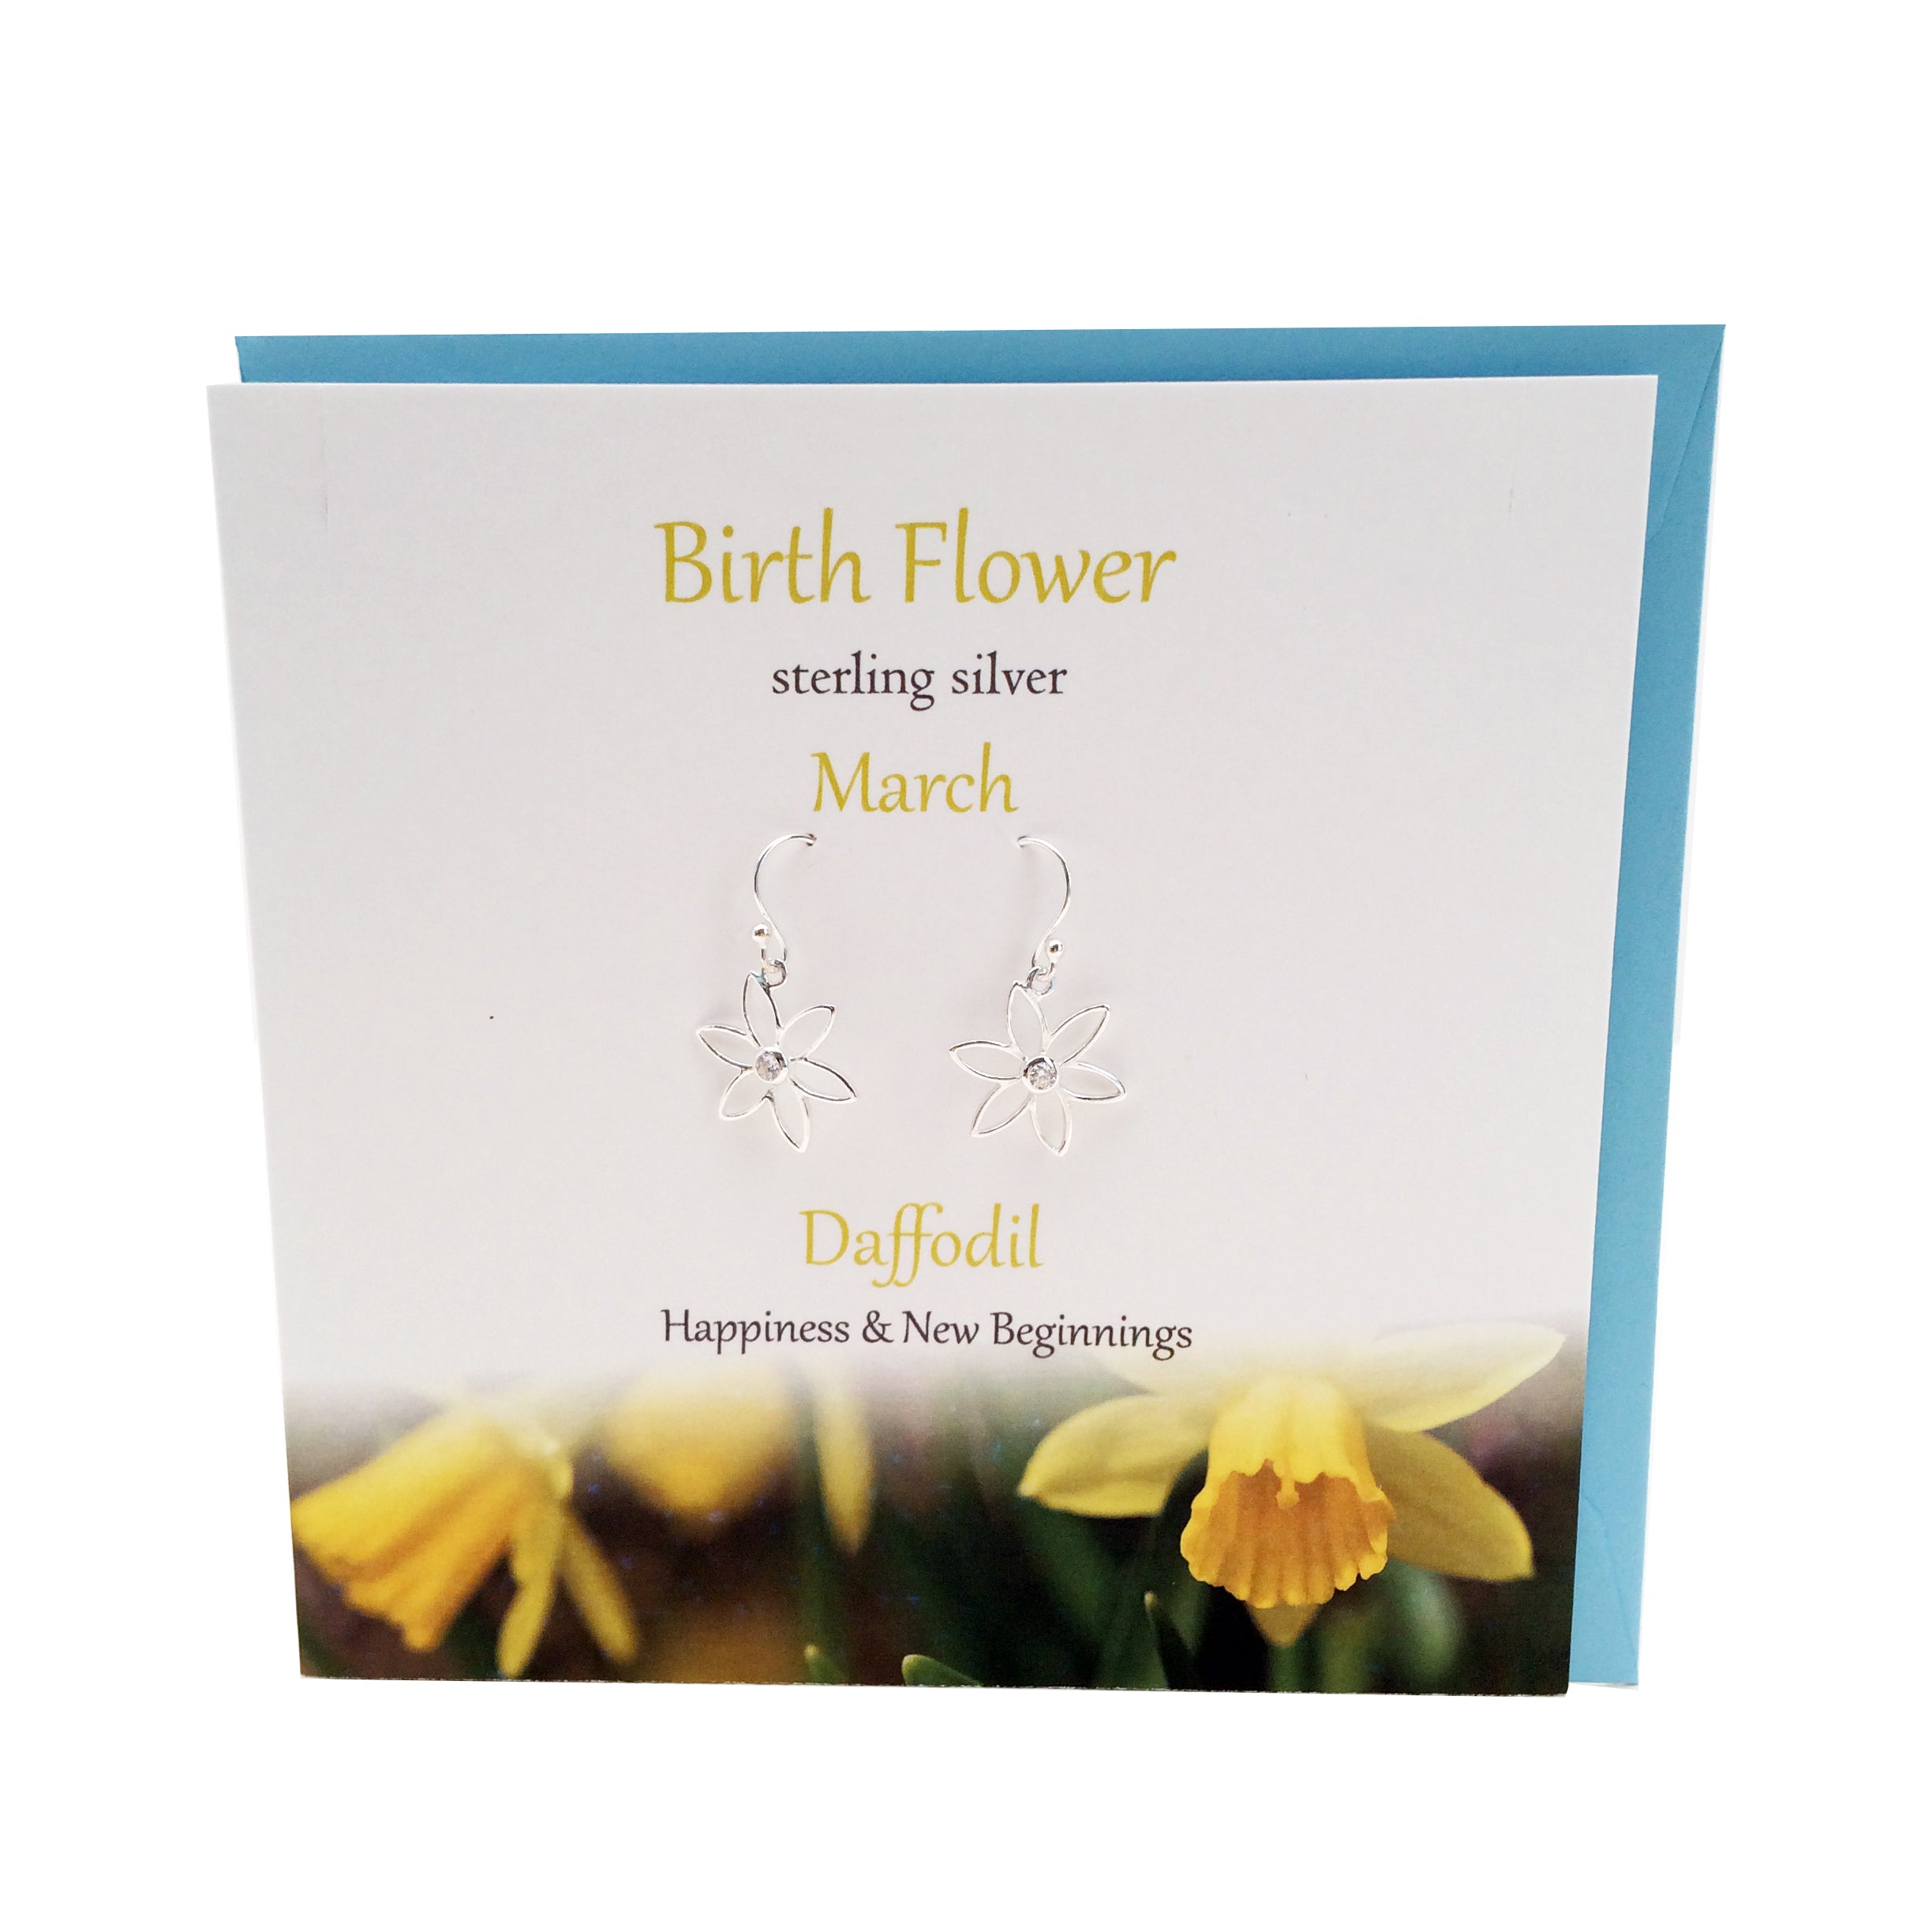 Birth Flower March silver earrings |Daffodil | The Silver Studio